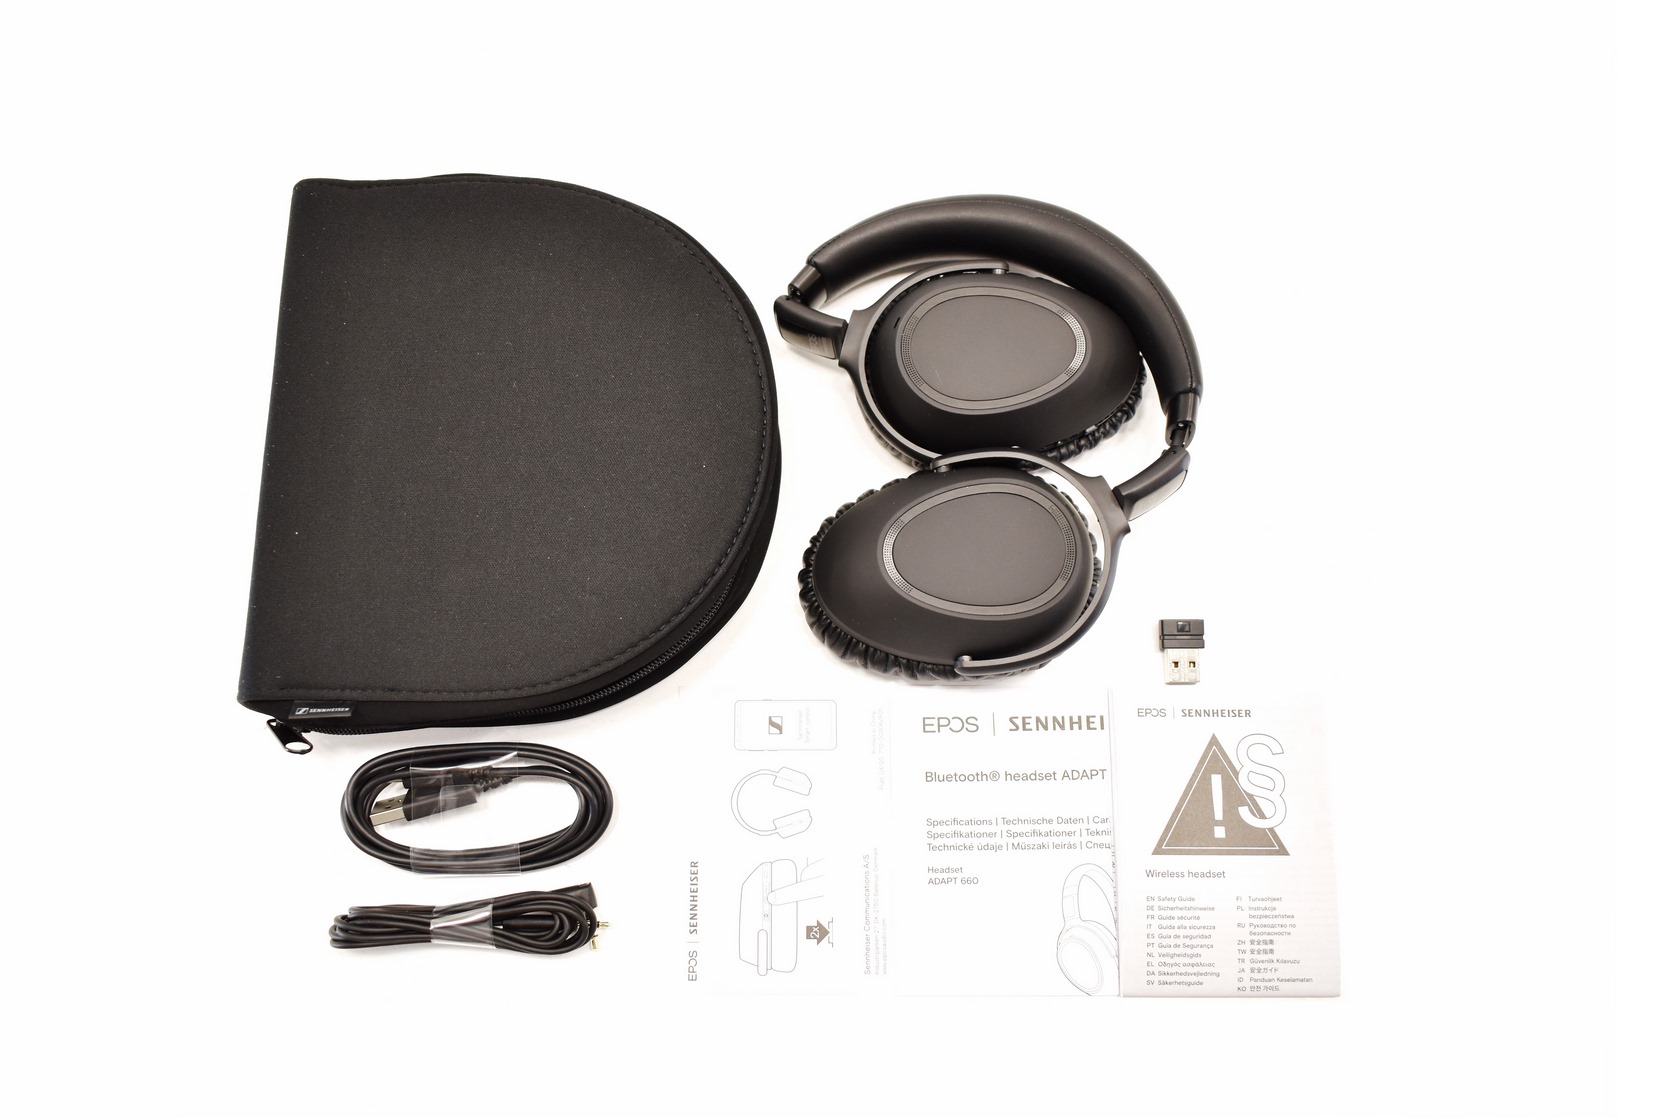 EPOS Sennheiser ADAPT 660 BT ANC Headset Review